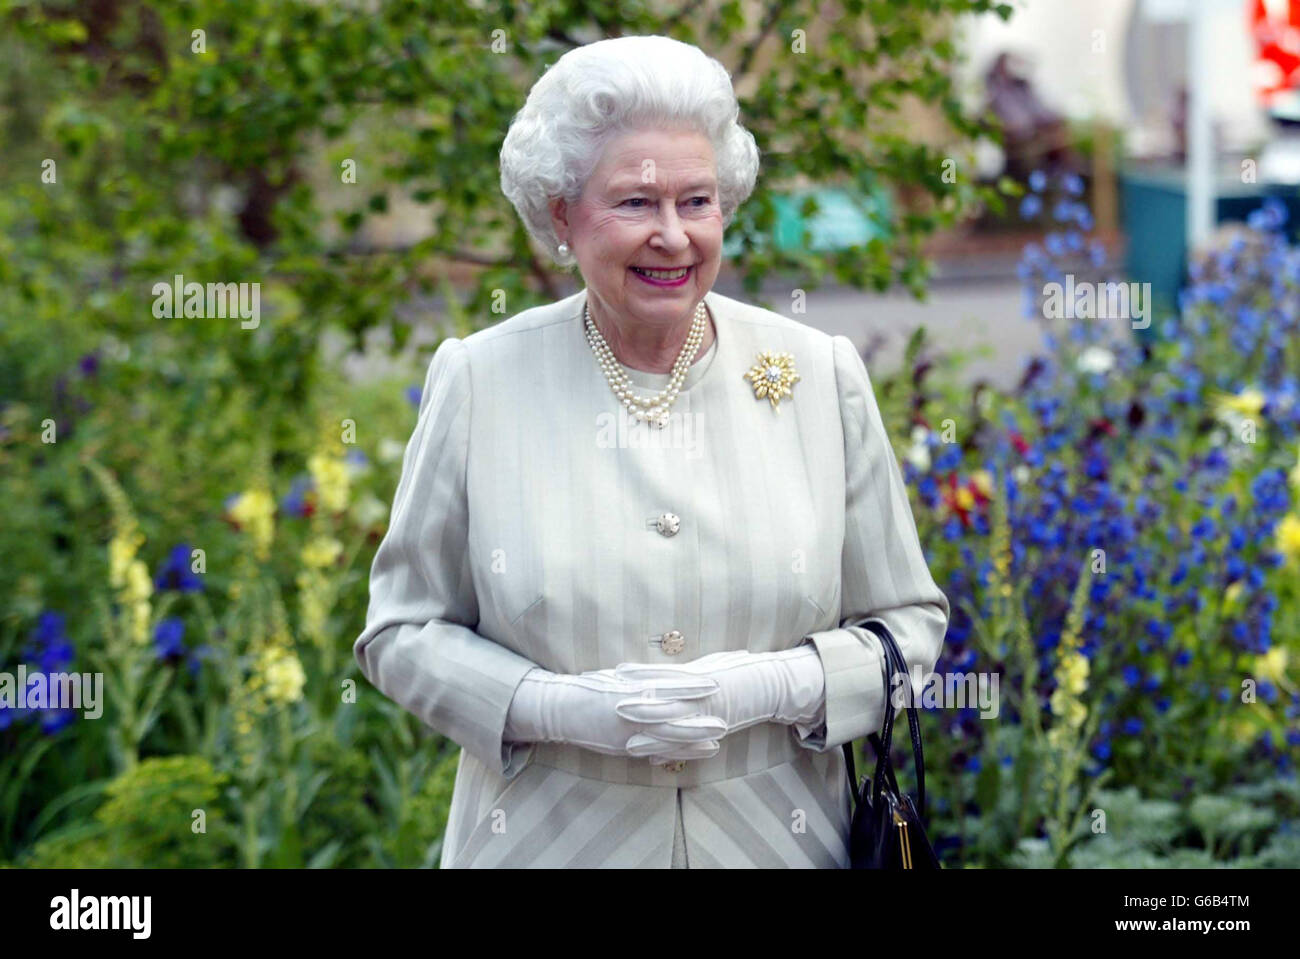 Queen Elizabeth II besucht die Chelsea Flower Show der Royal Horticultural Society in London. Stockfoto